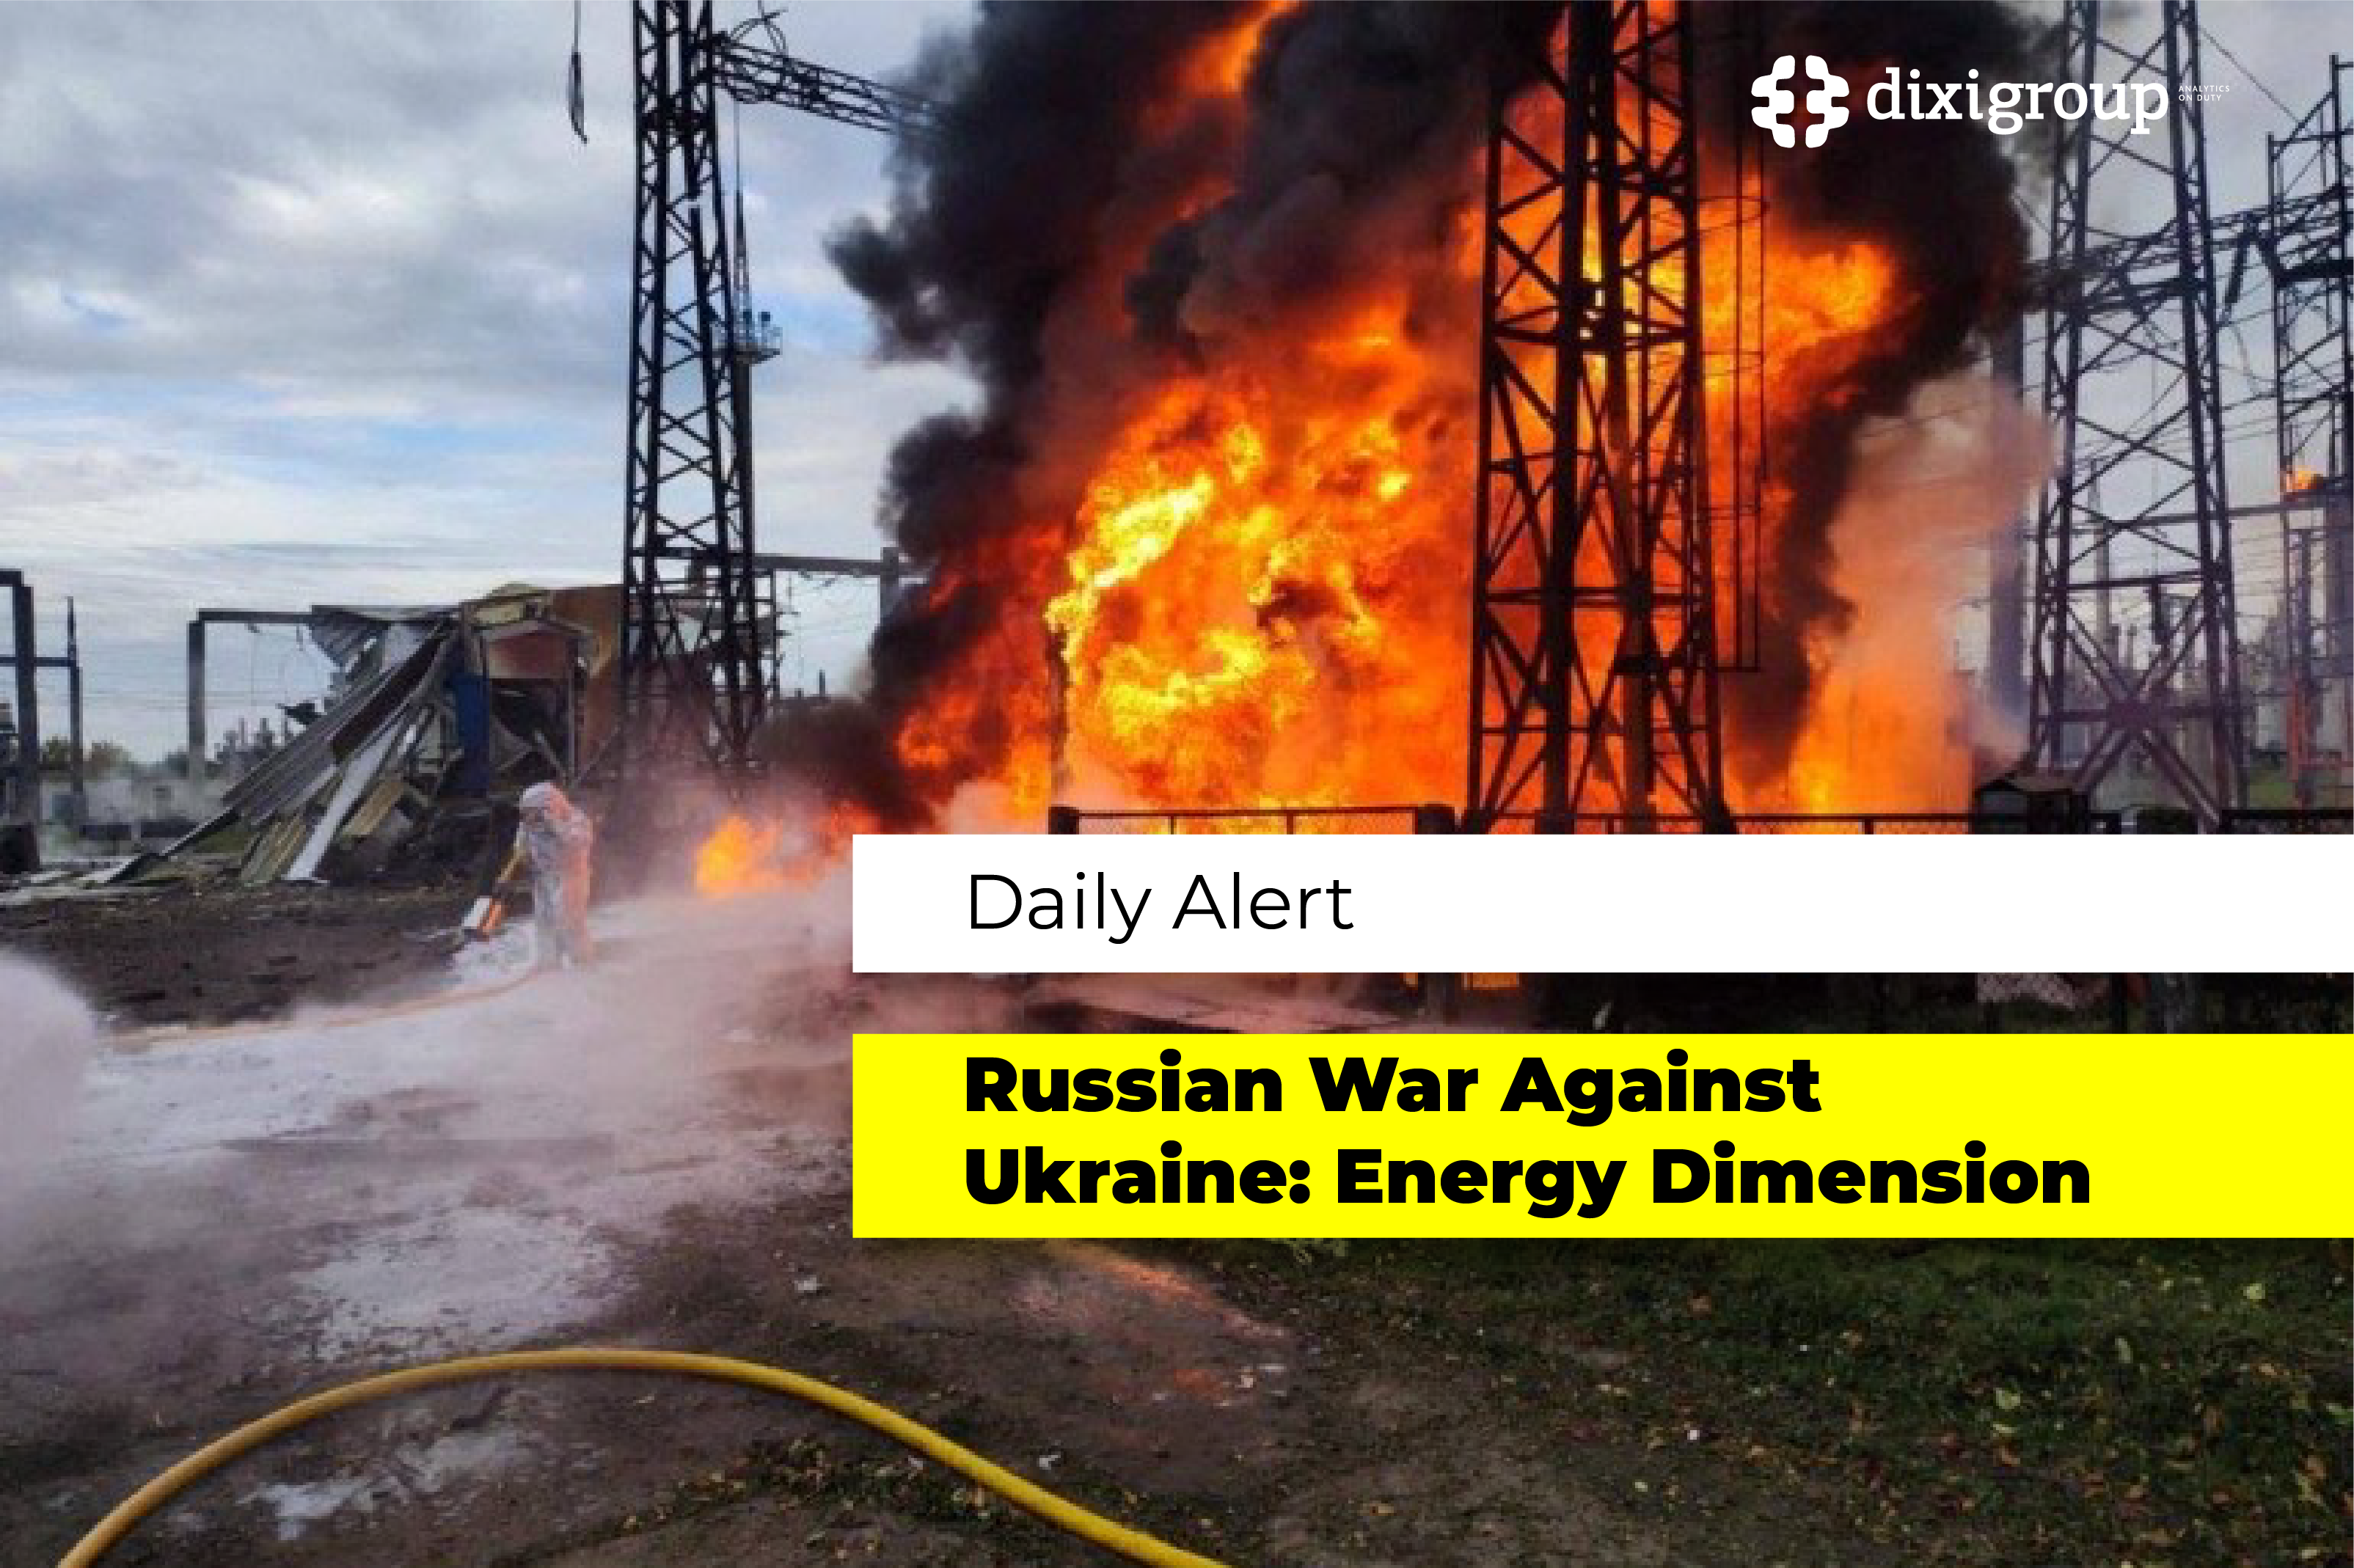 Russian War Against Ukraine: Energy Dimension (daily updating DiXi Group alert)